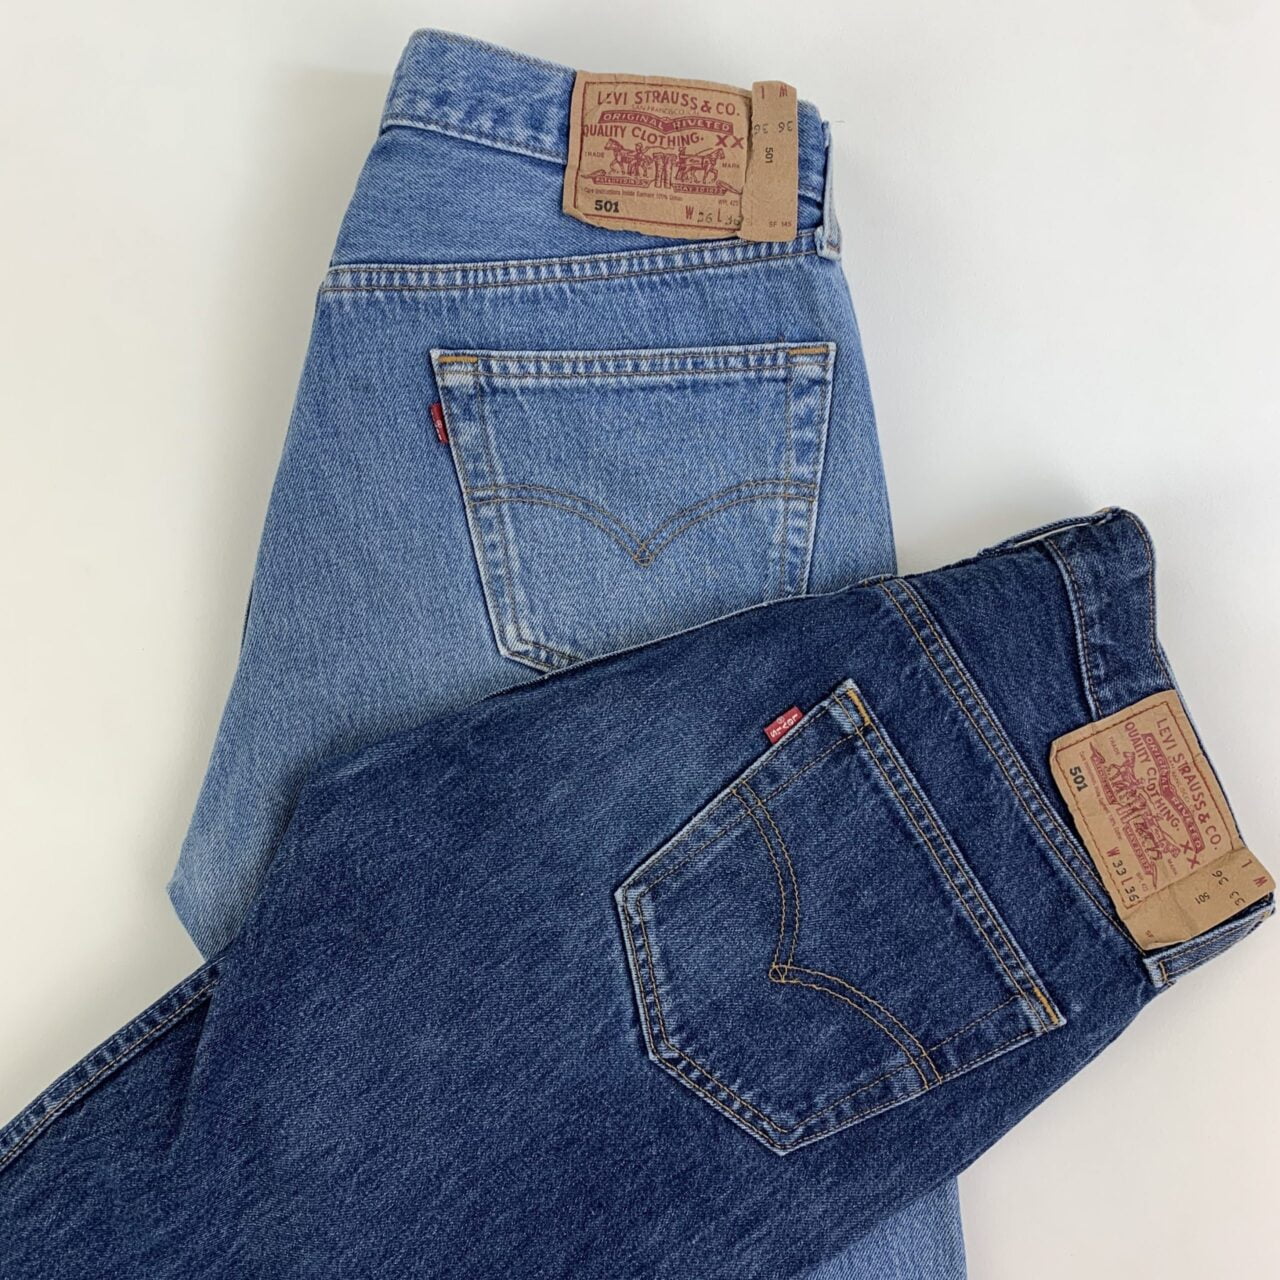 20 x Levi's 501 Jeans - Grade A - Lima Lima Vintage